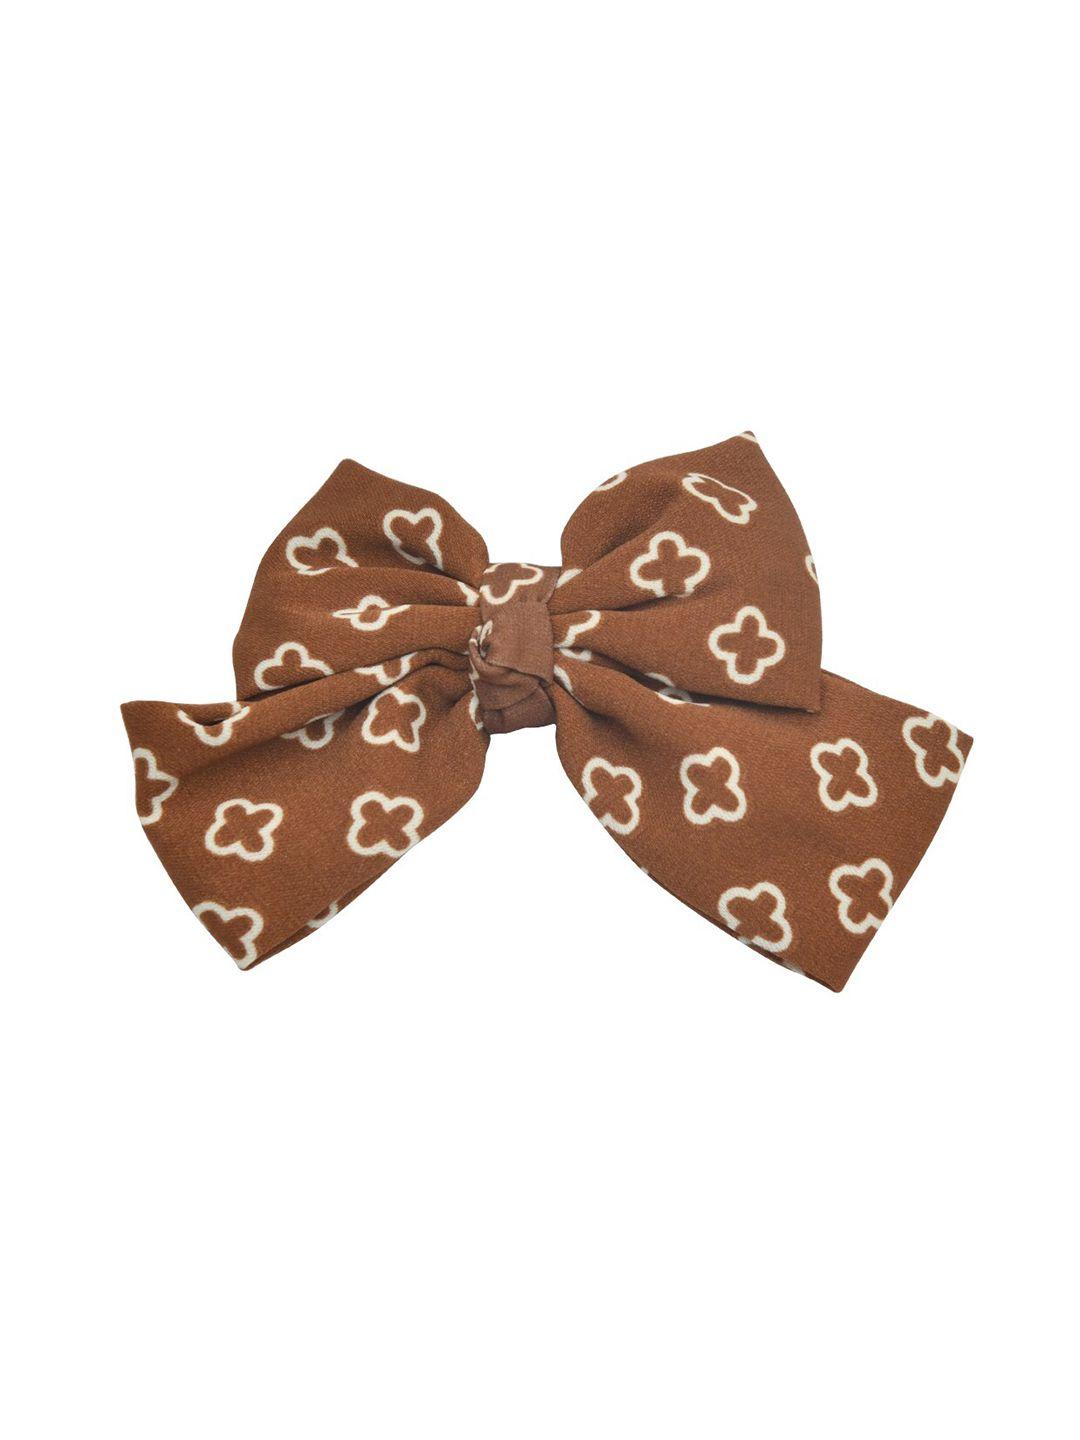 funkrafts girls brown & off-white printed bow alligator hair clip